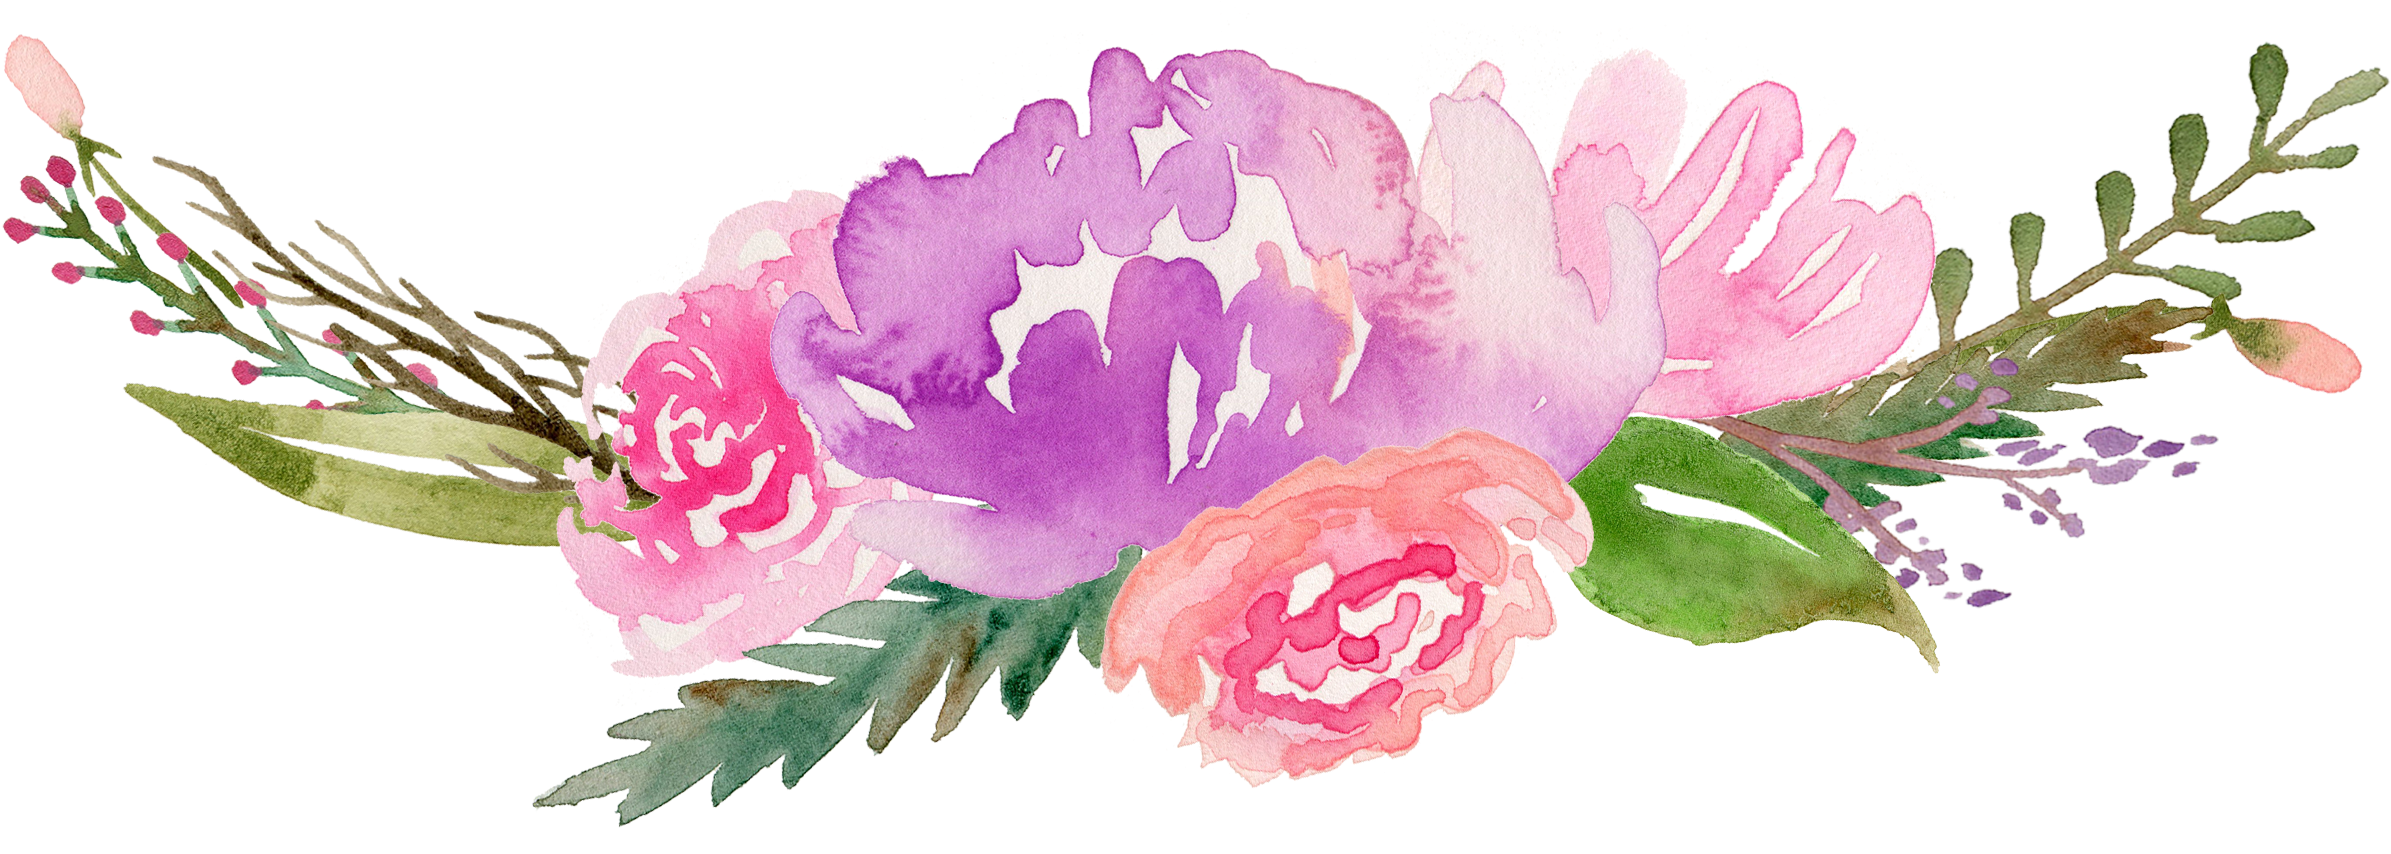 Flower Watercolor Art PNG Pic